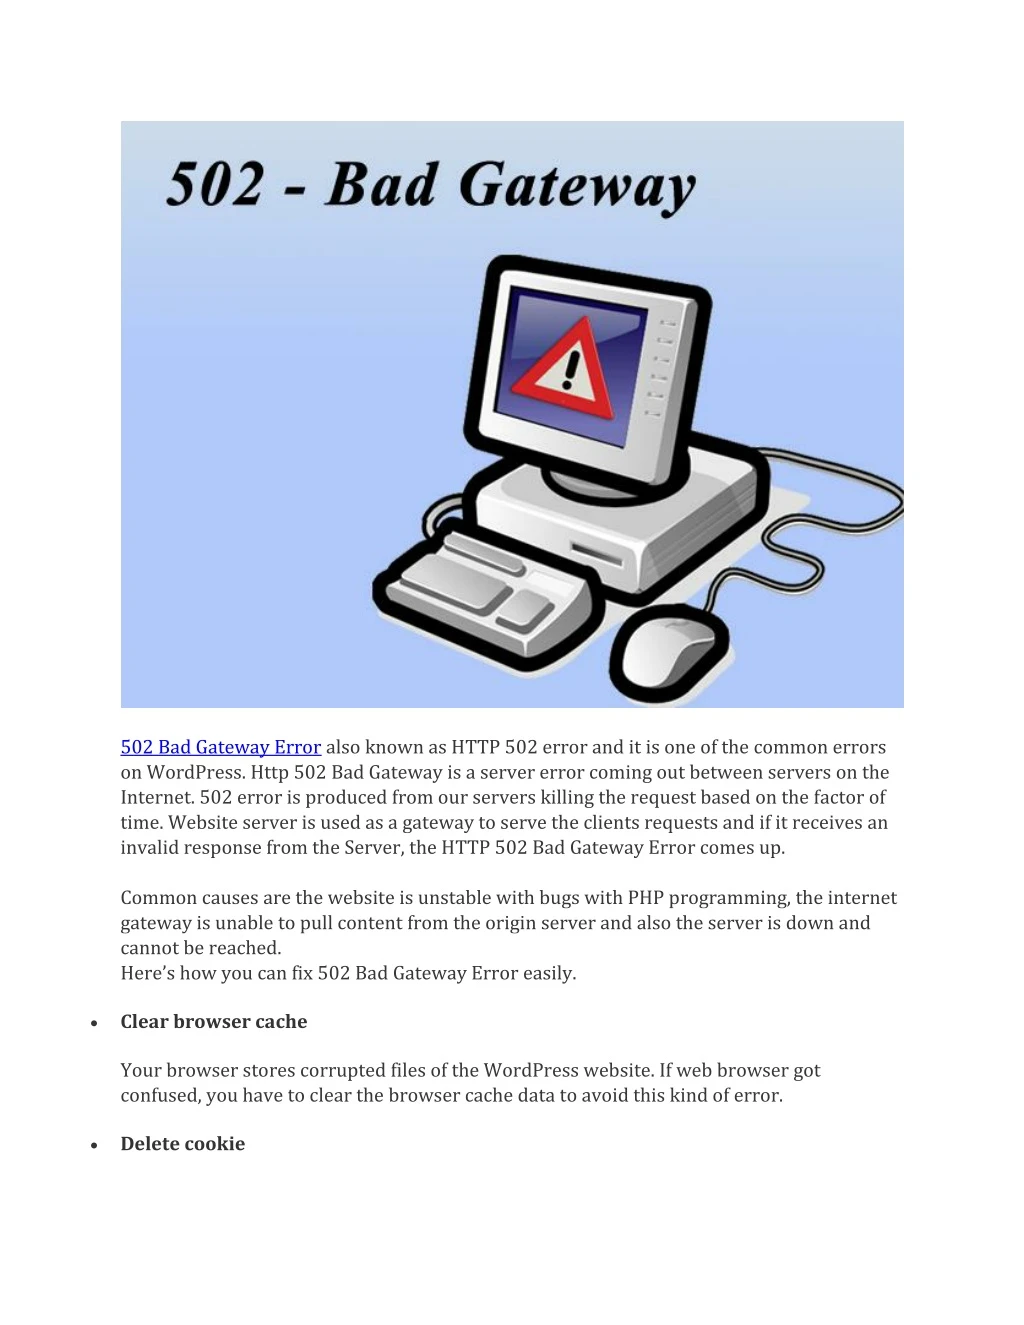 502 bad gateway error also known as http